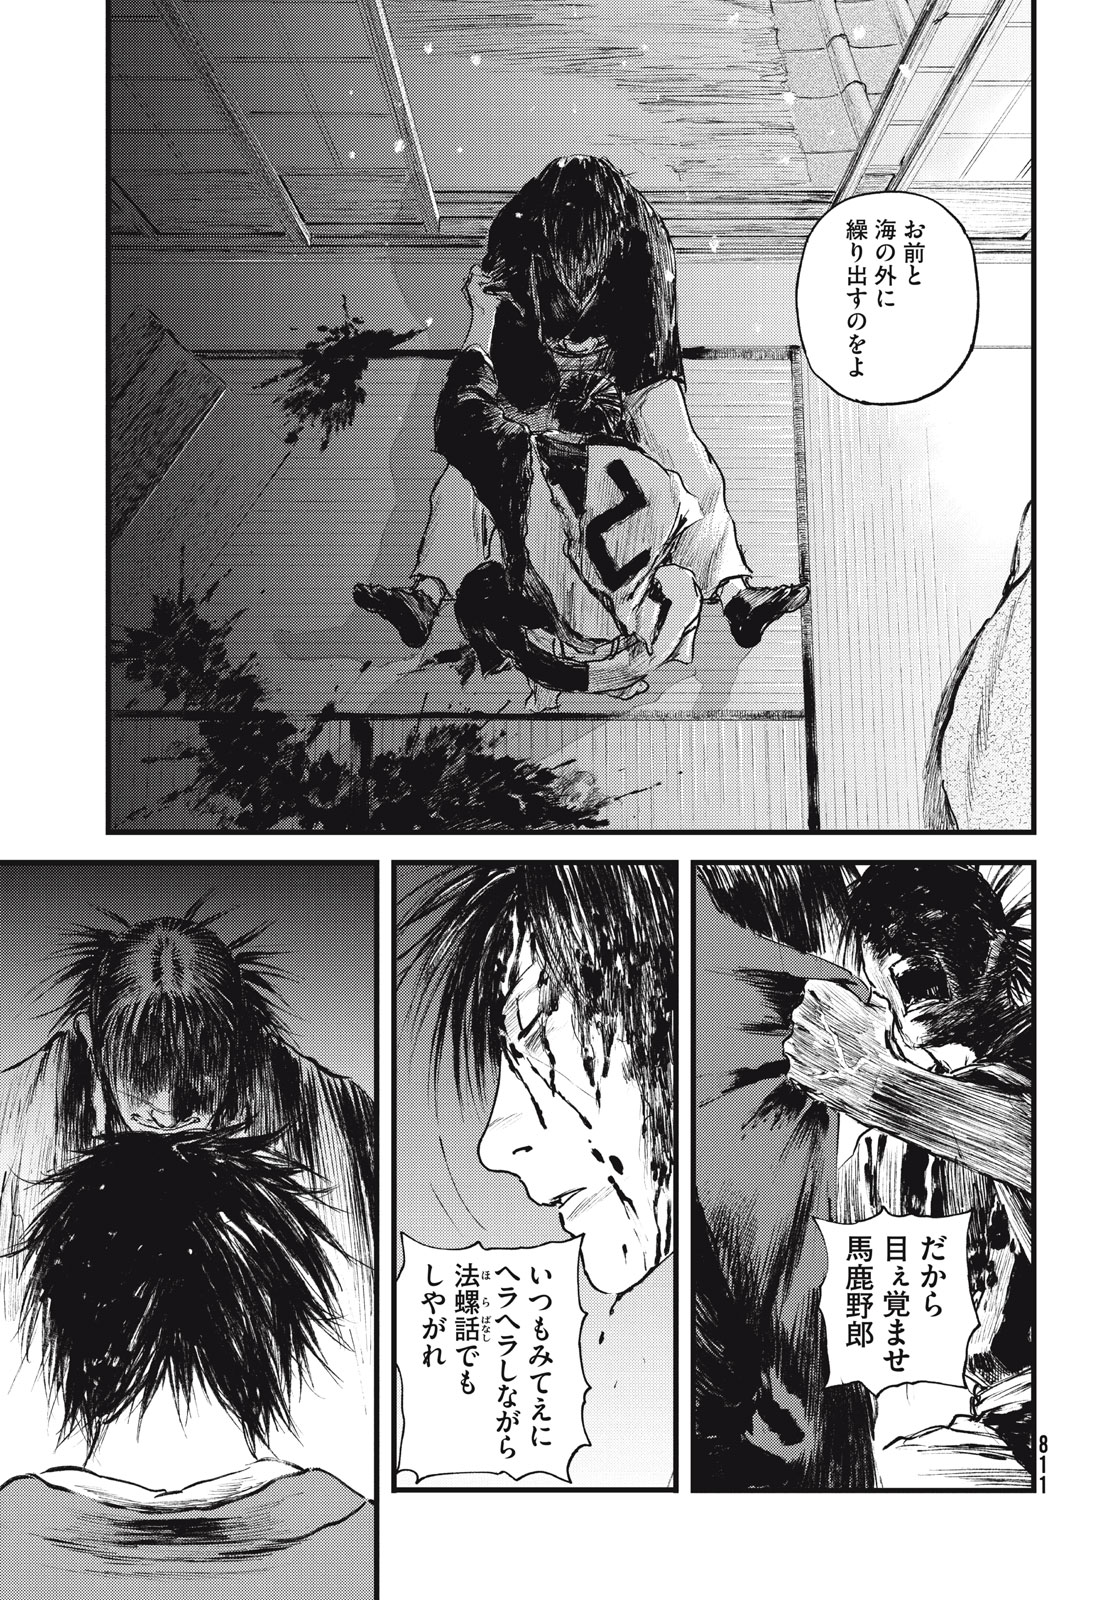 Blade of the Immortal: Bakumatsu Arc - Chapter 55 - Page 29